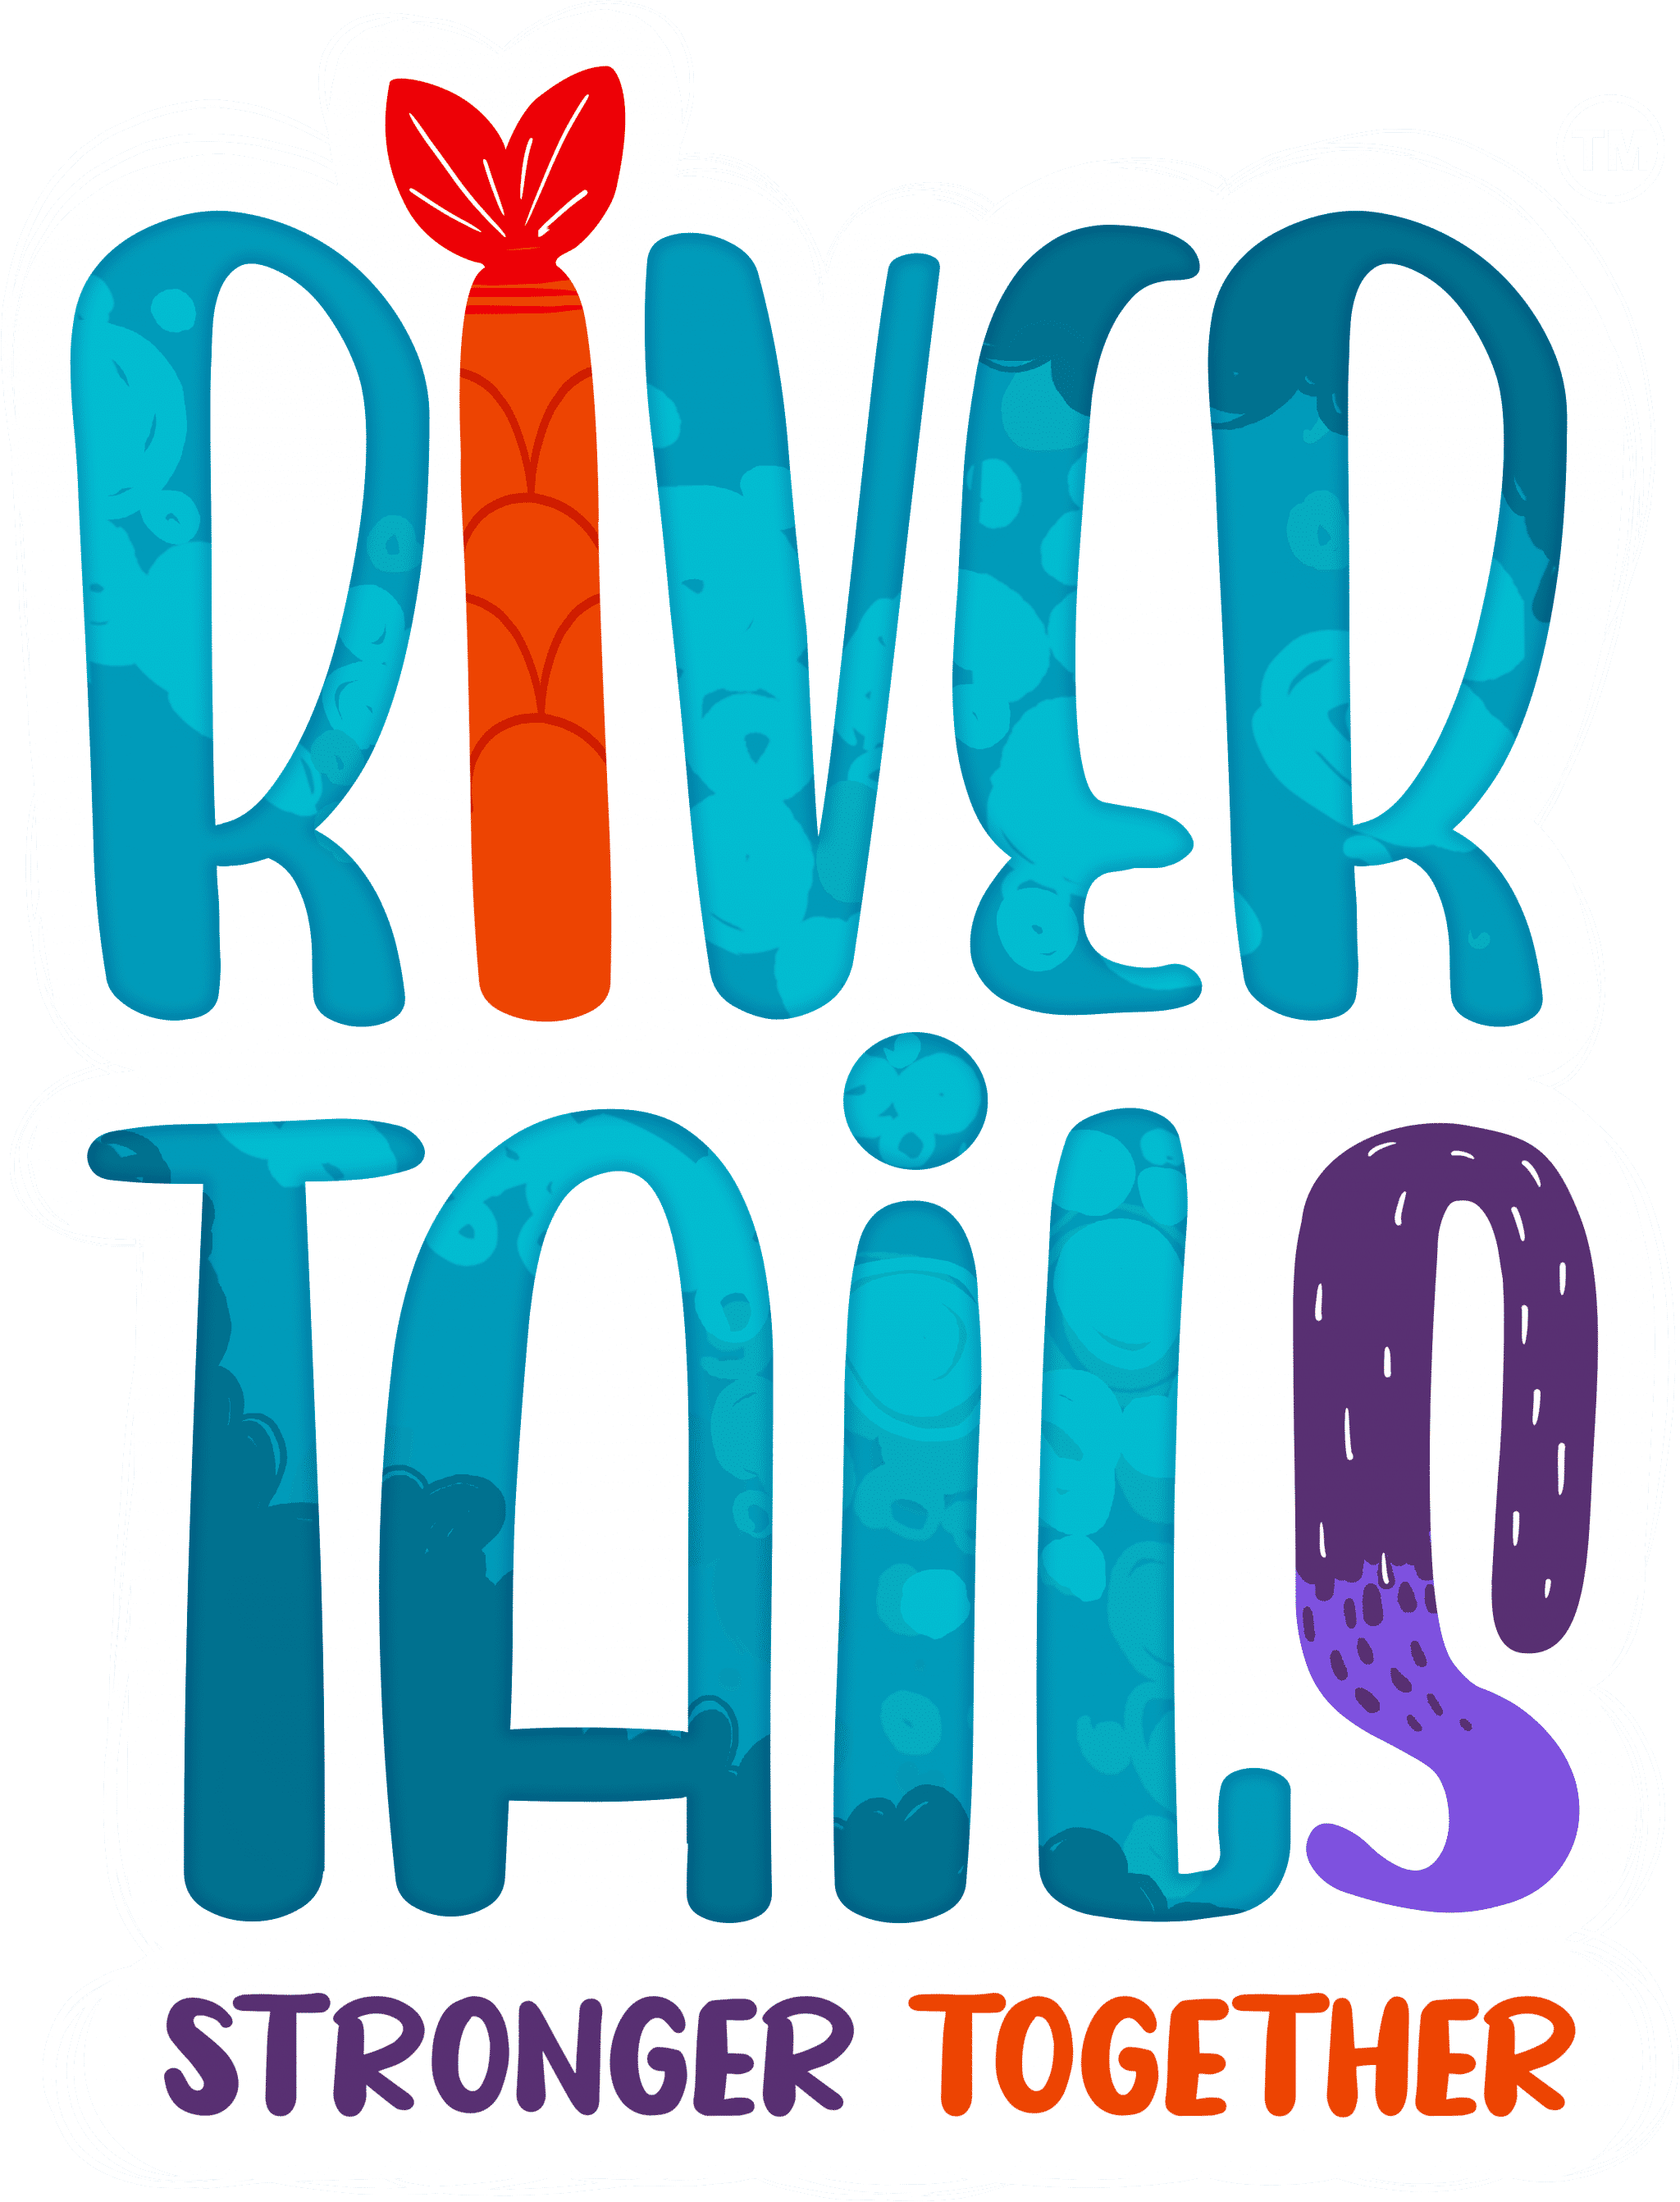 River Tails: Stronger Together